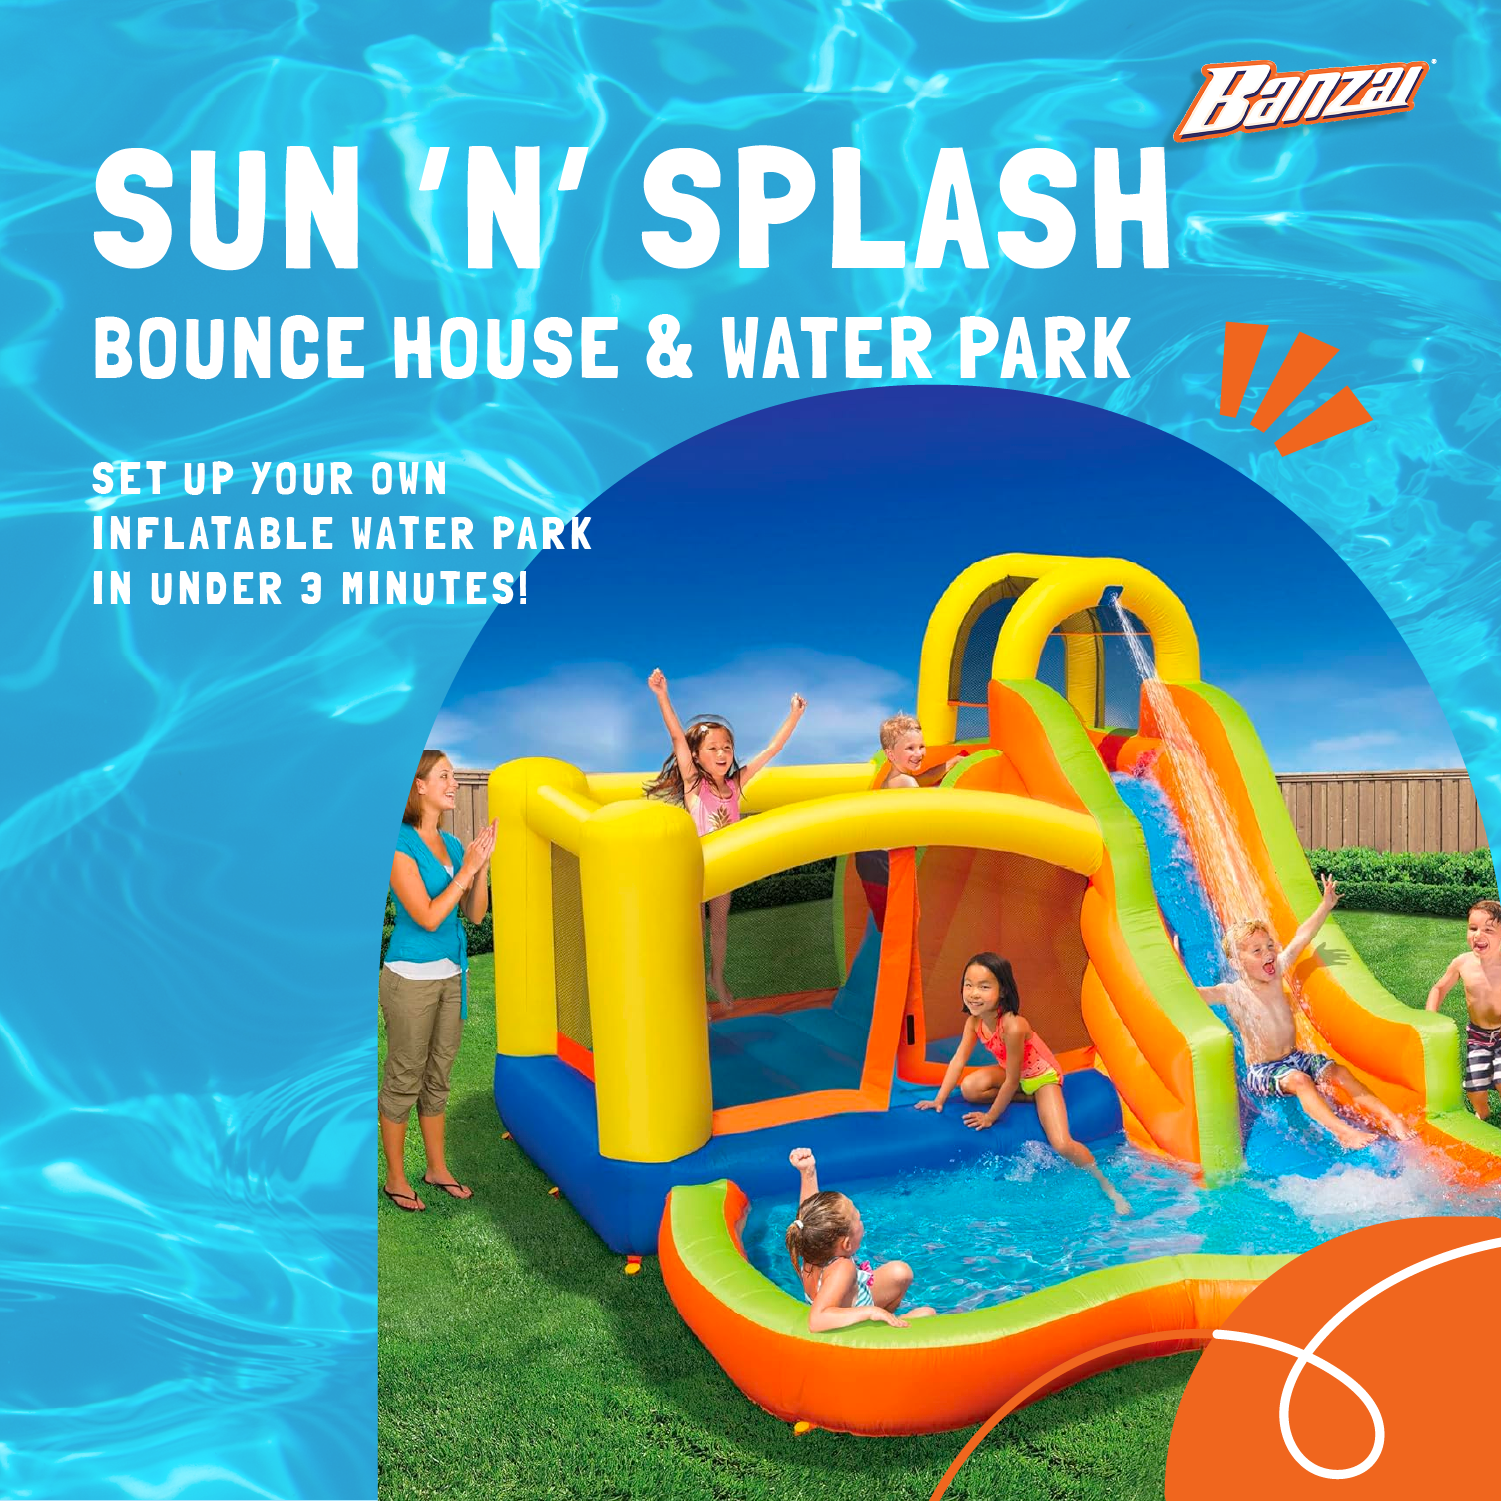 Banzai Sun 'N Splash Fun Kids Inflatable Bounce House and Water Slide Park - image 2 of 11